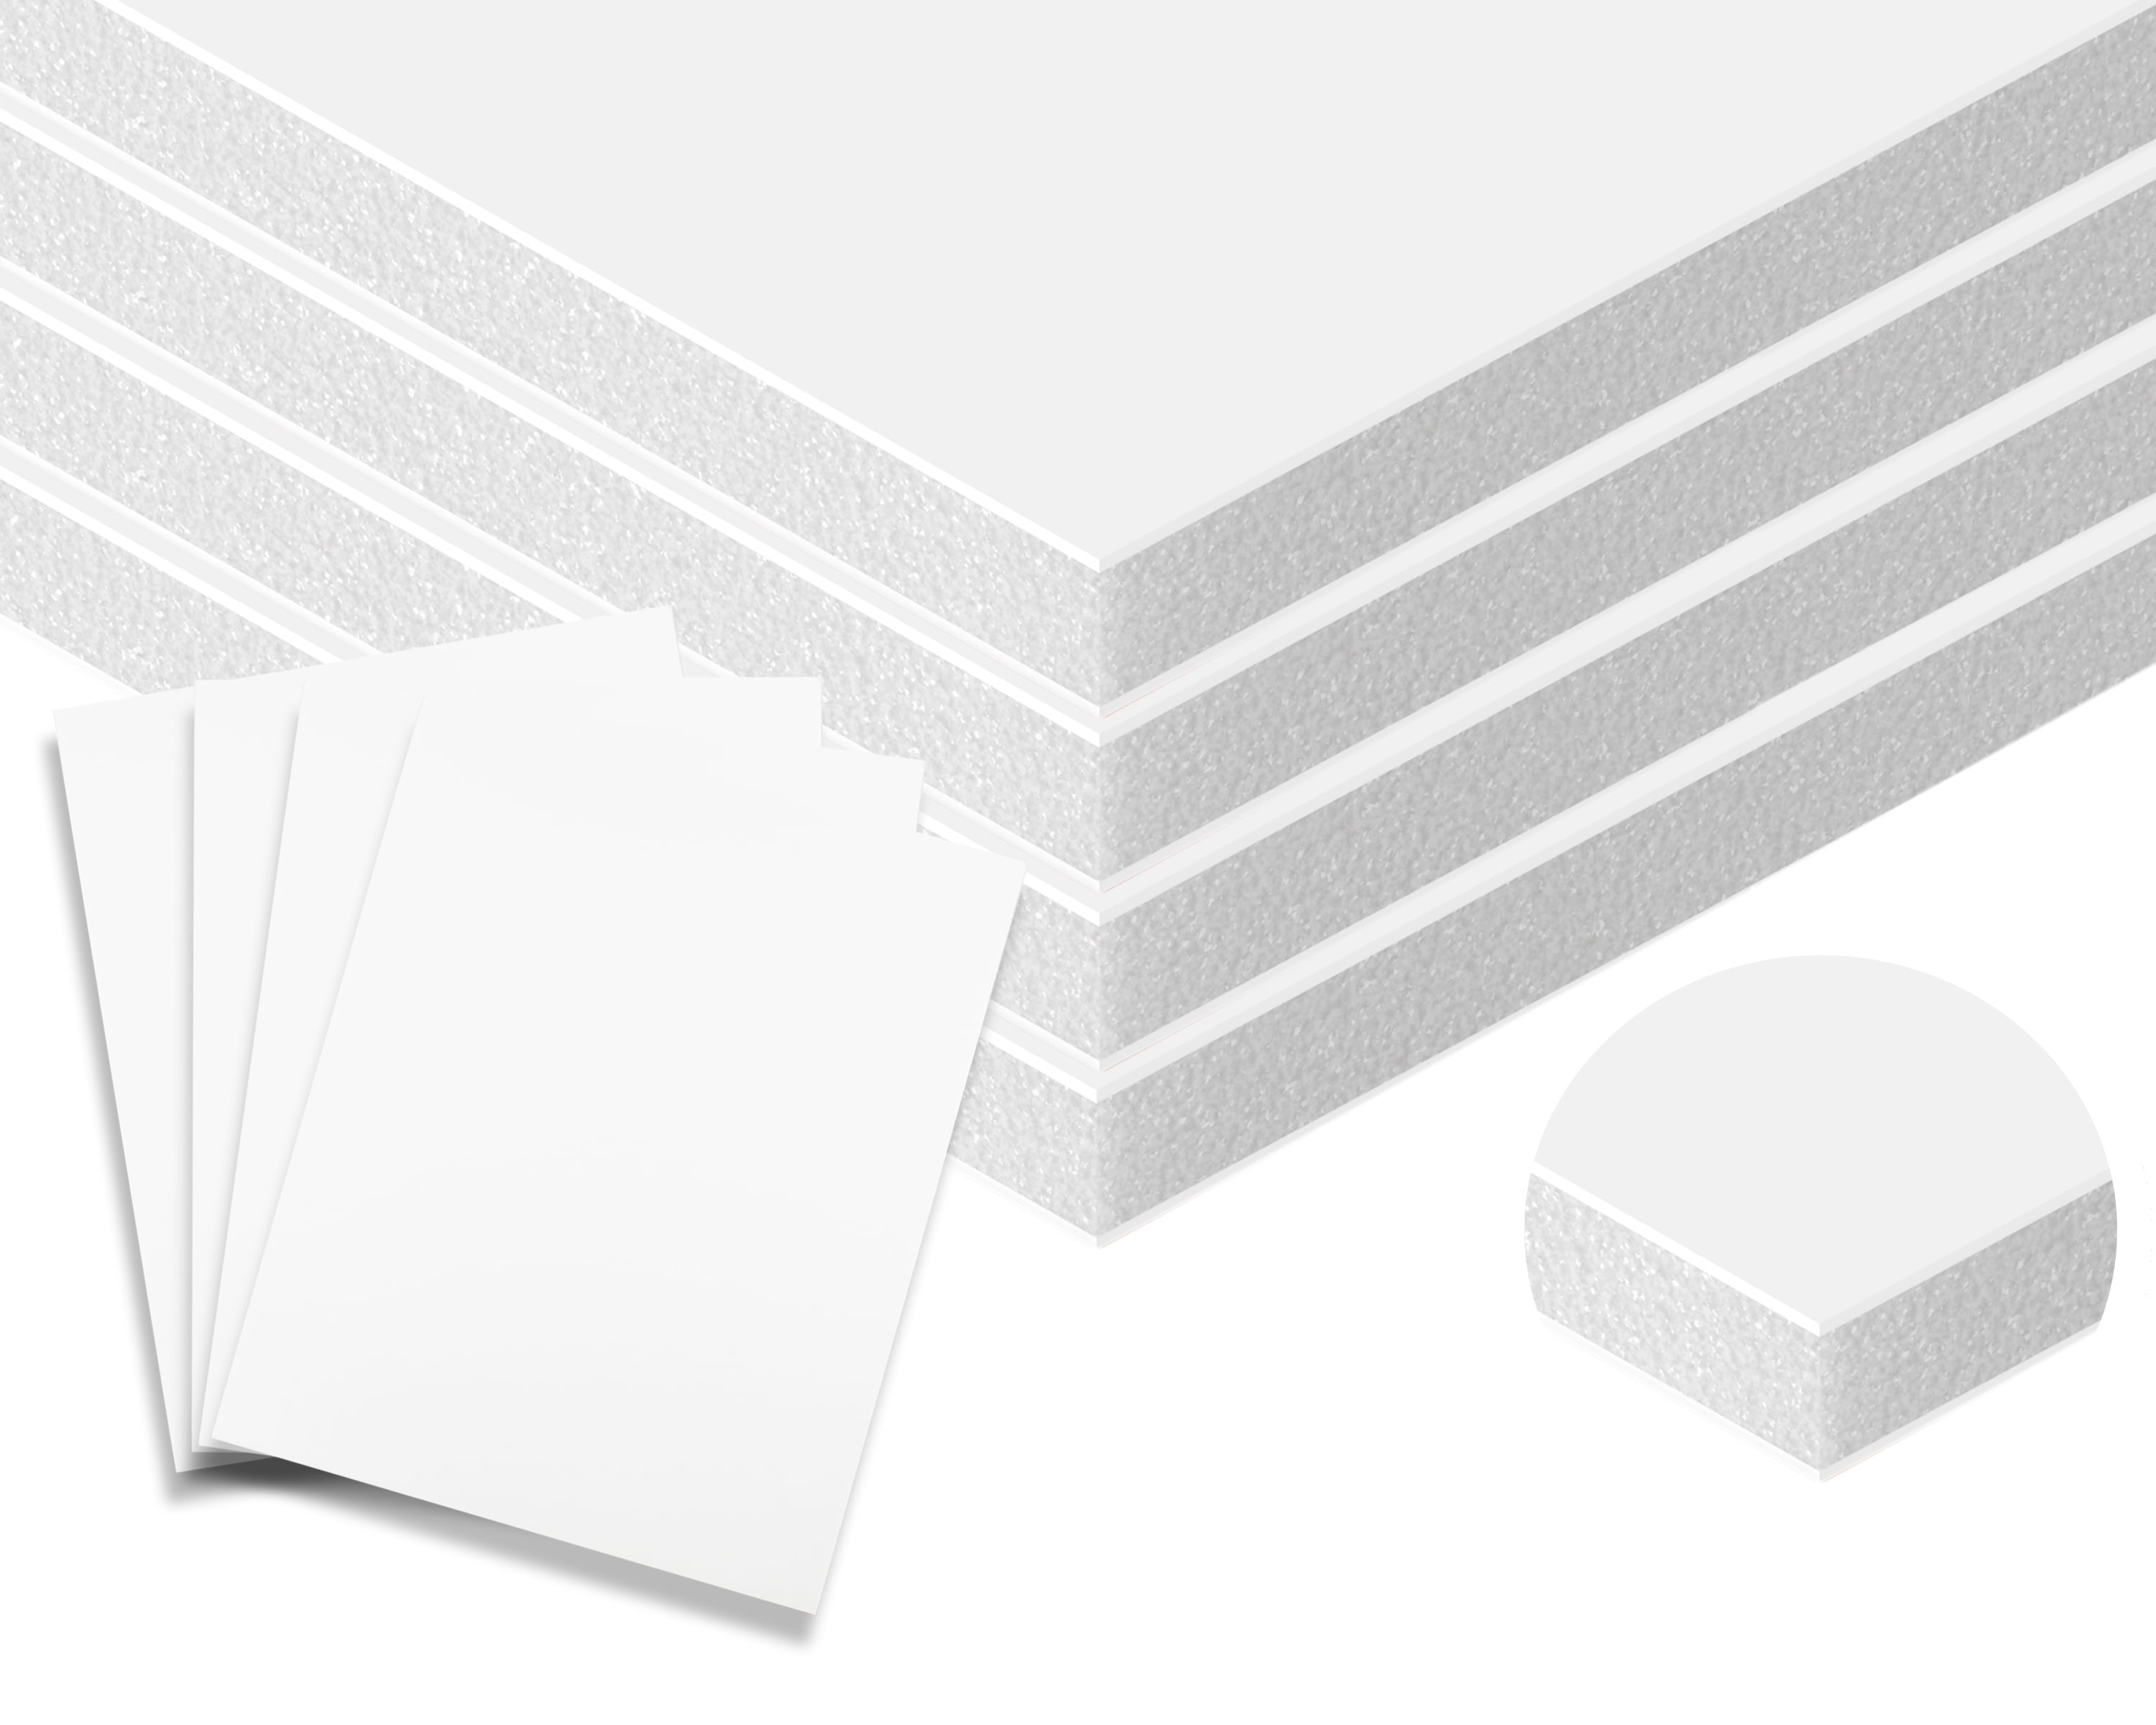 The Supplies Guys: Pacon Spotlight Single-walled Tri-fold Presentation Board